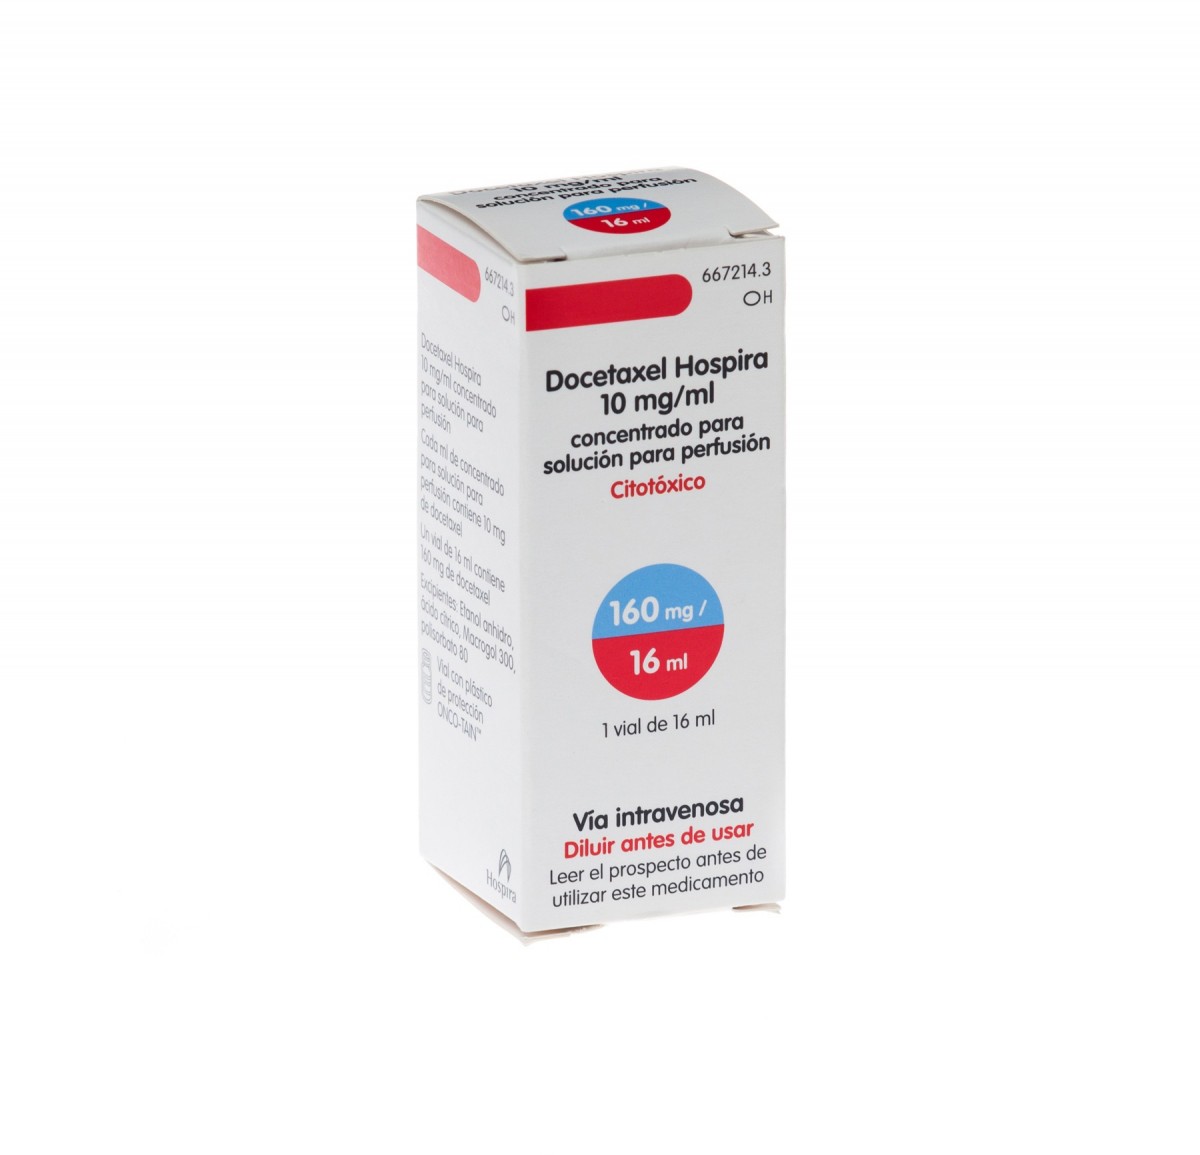 DOCETAXEL HOSPIRA 10 mg/ml CONCENTRADO PARA SOLUCION PARA PERFUSION, 1 vial de 16 ml fotografía del envase.